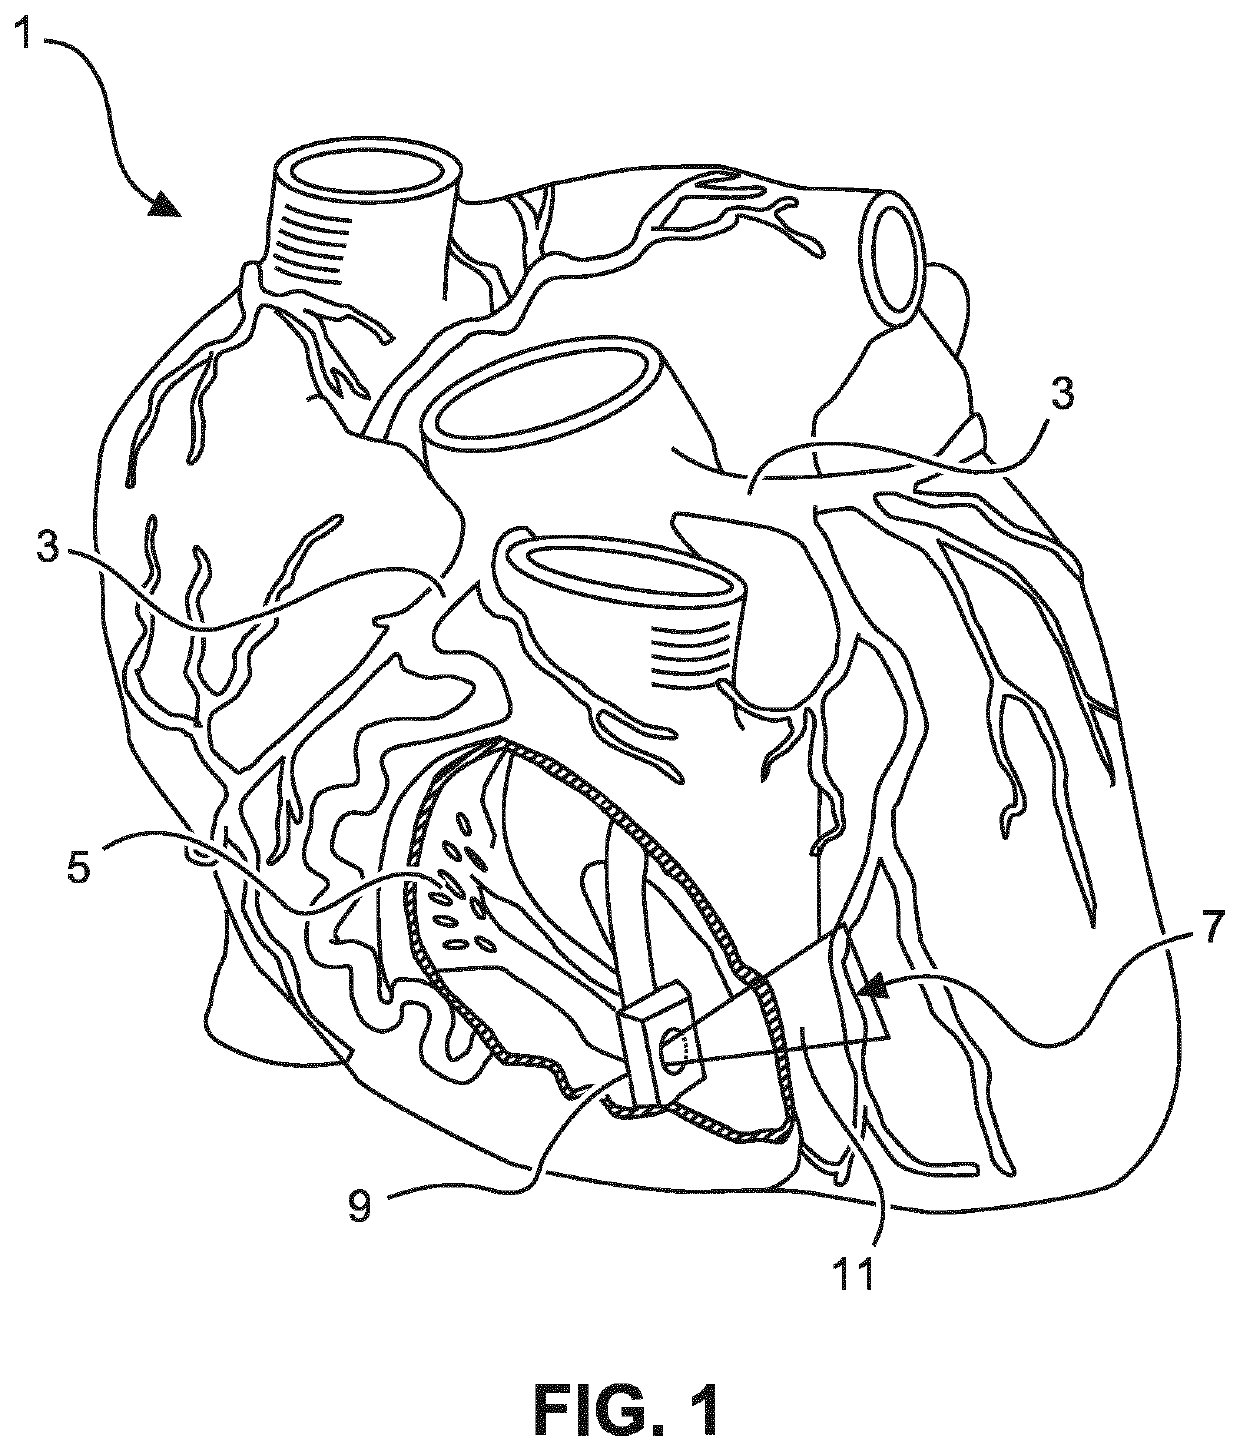 Coronary circulation using intra-cardiac echo